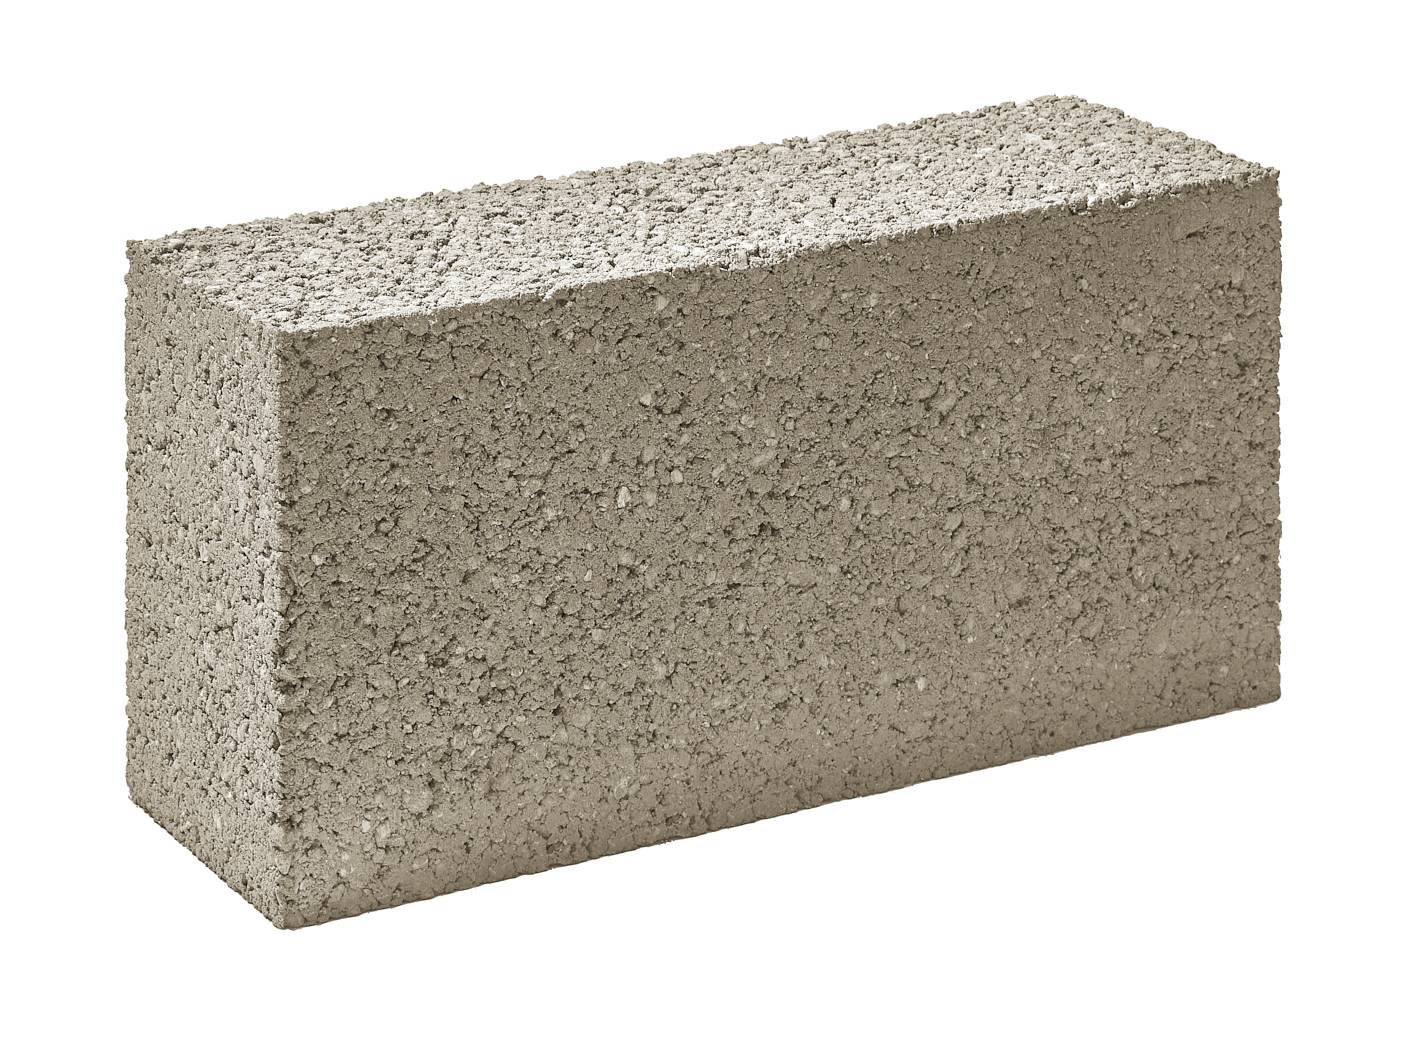 Lignacrete 140 mm Solid 22.5 N Concrete Blocks - High Density Robust Loadbearing Units